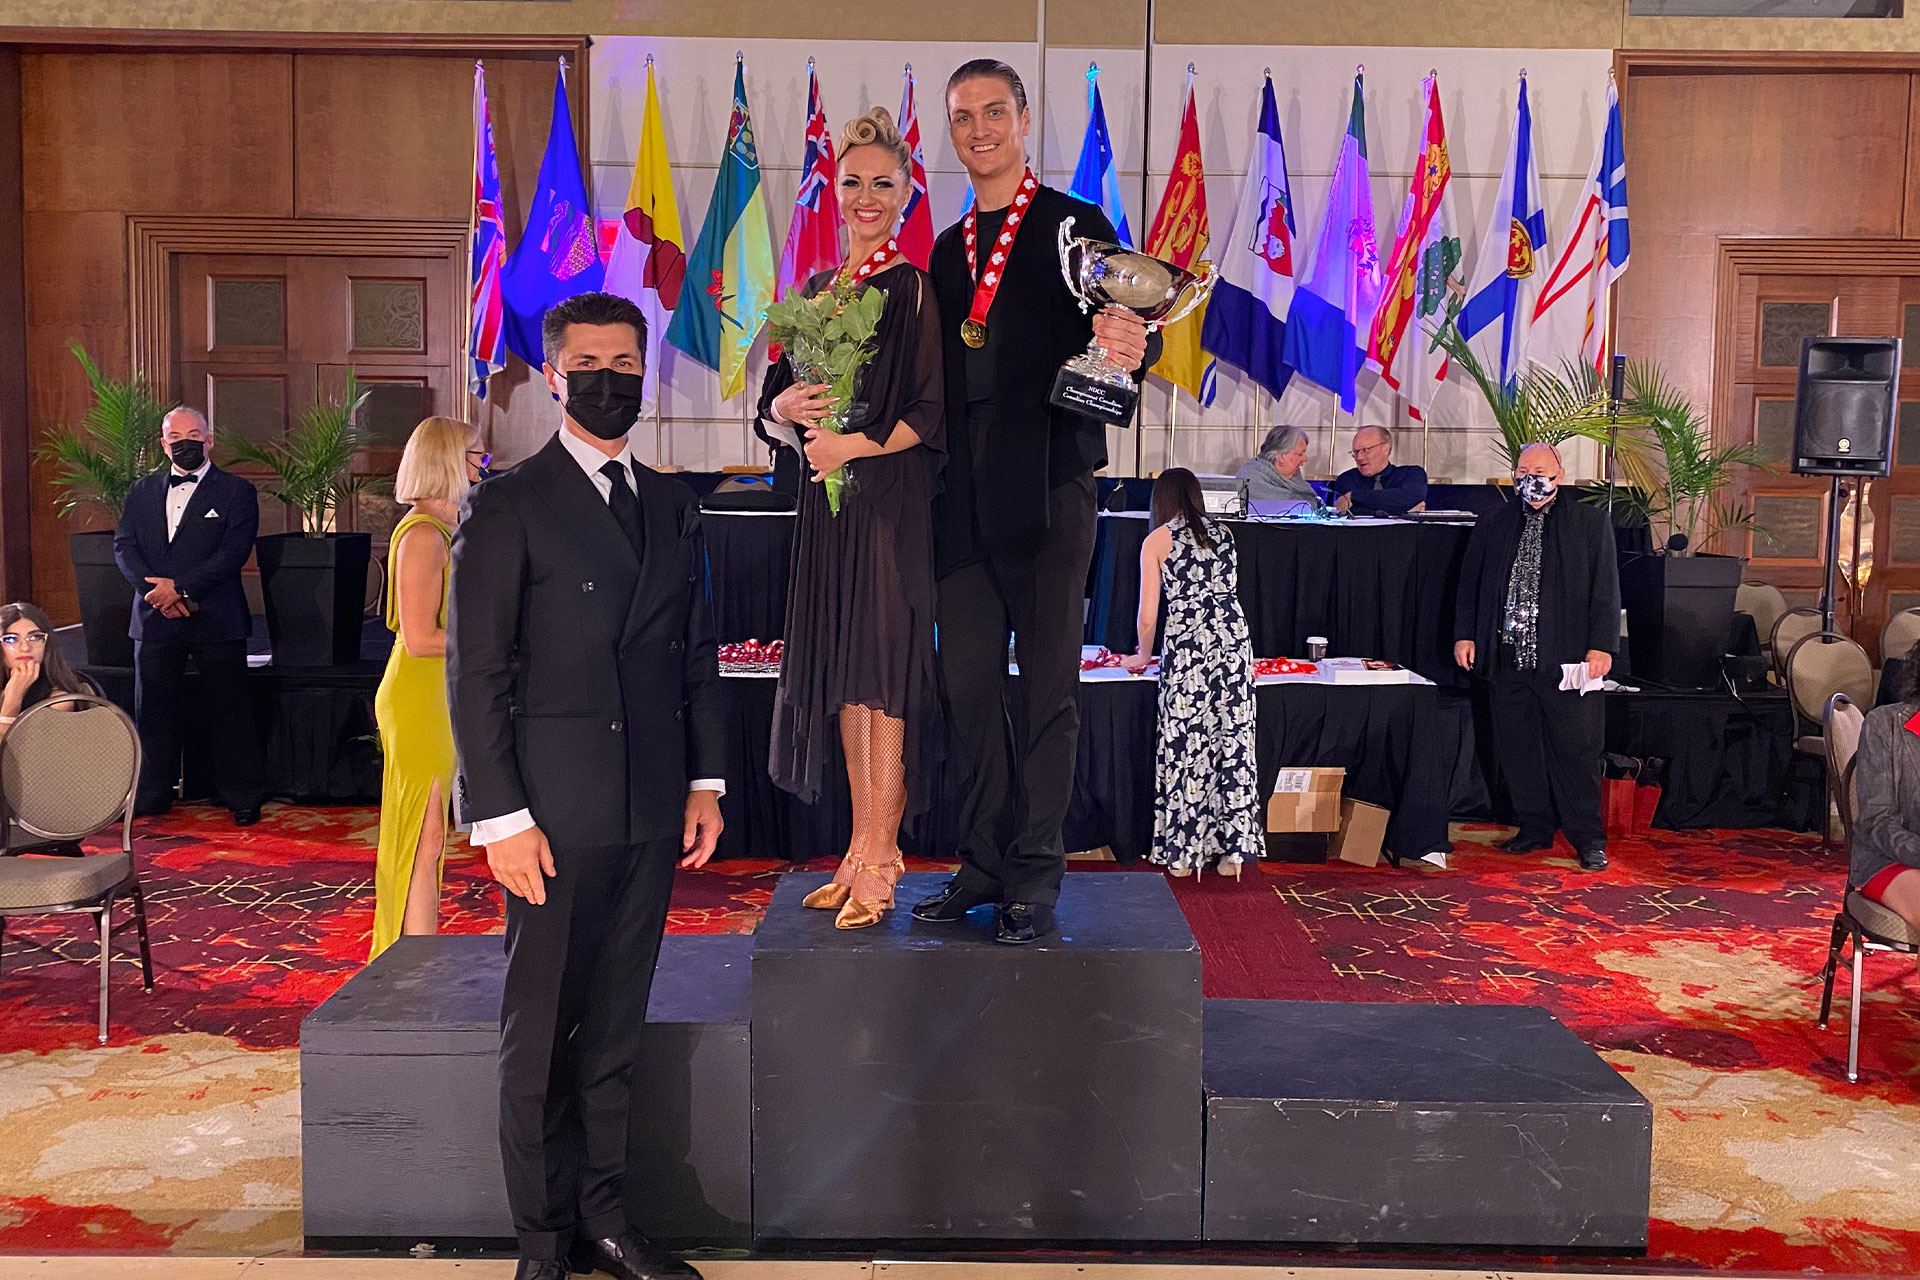 Canadian Professional 9-Dance Championship awards 2021